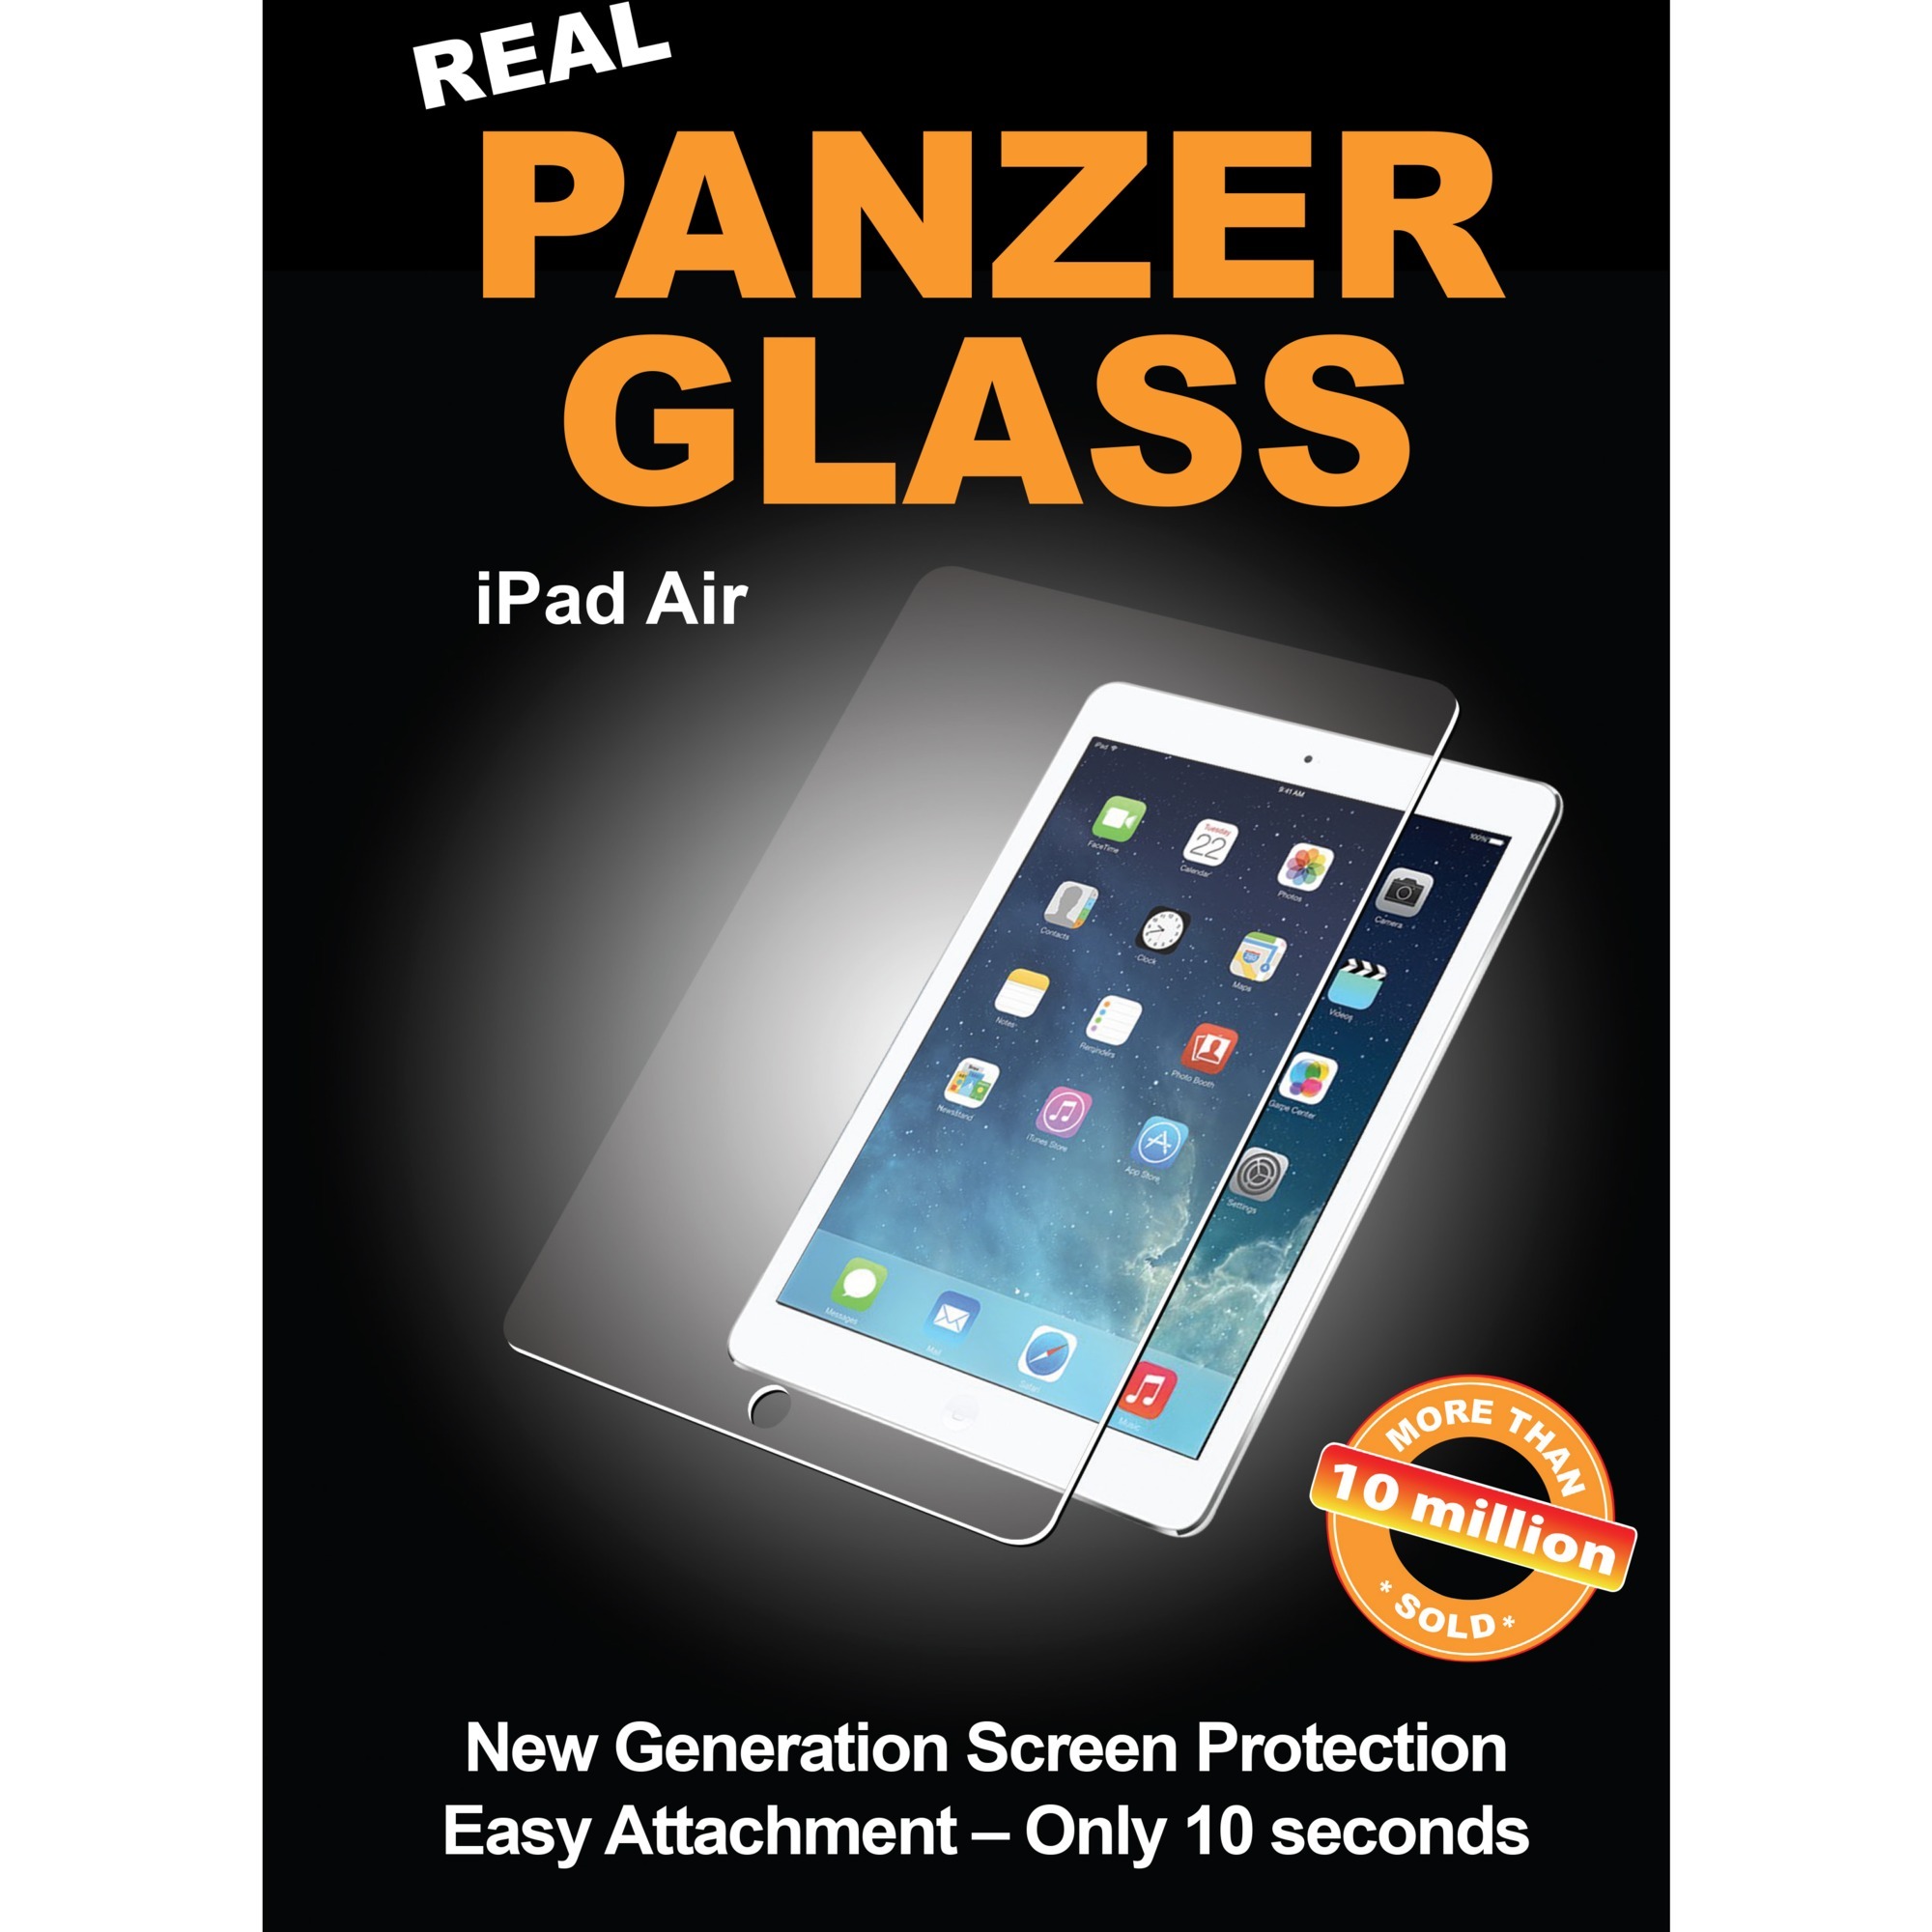 P1061 ochraniacz ekranu iPad Air/Air 2 1 szt., Folia ochronna